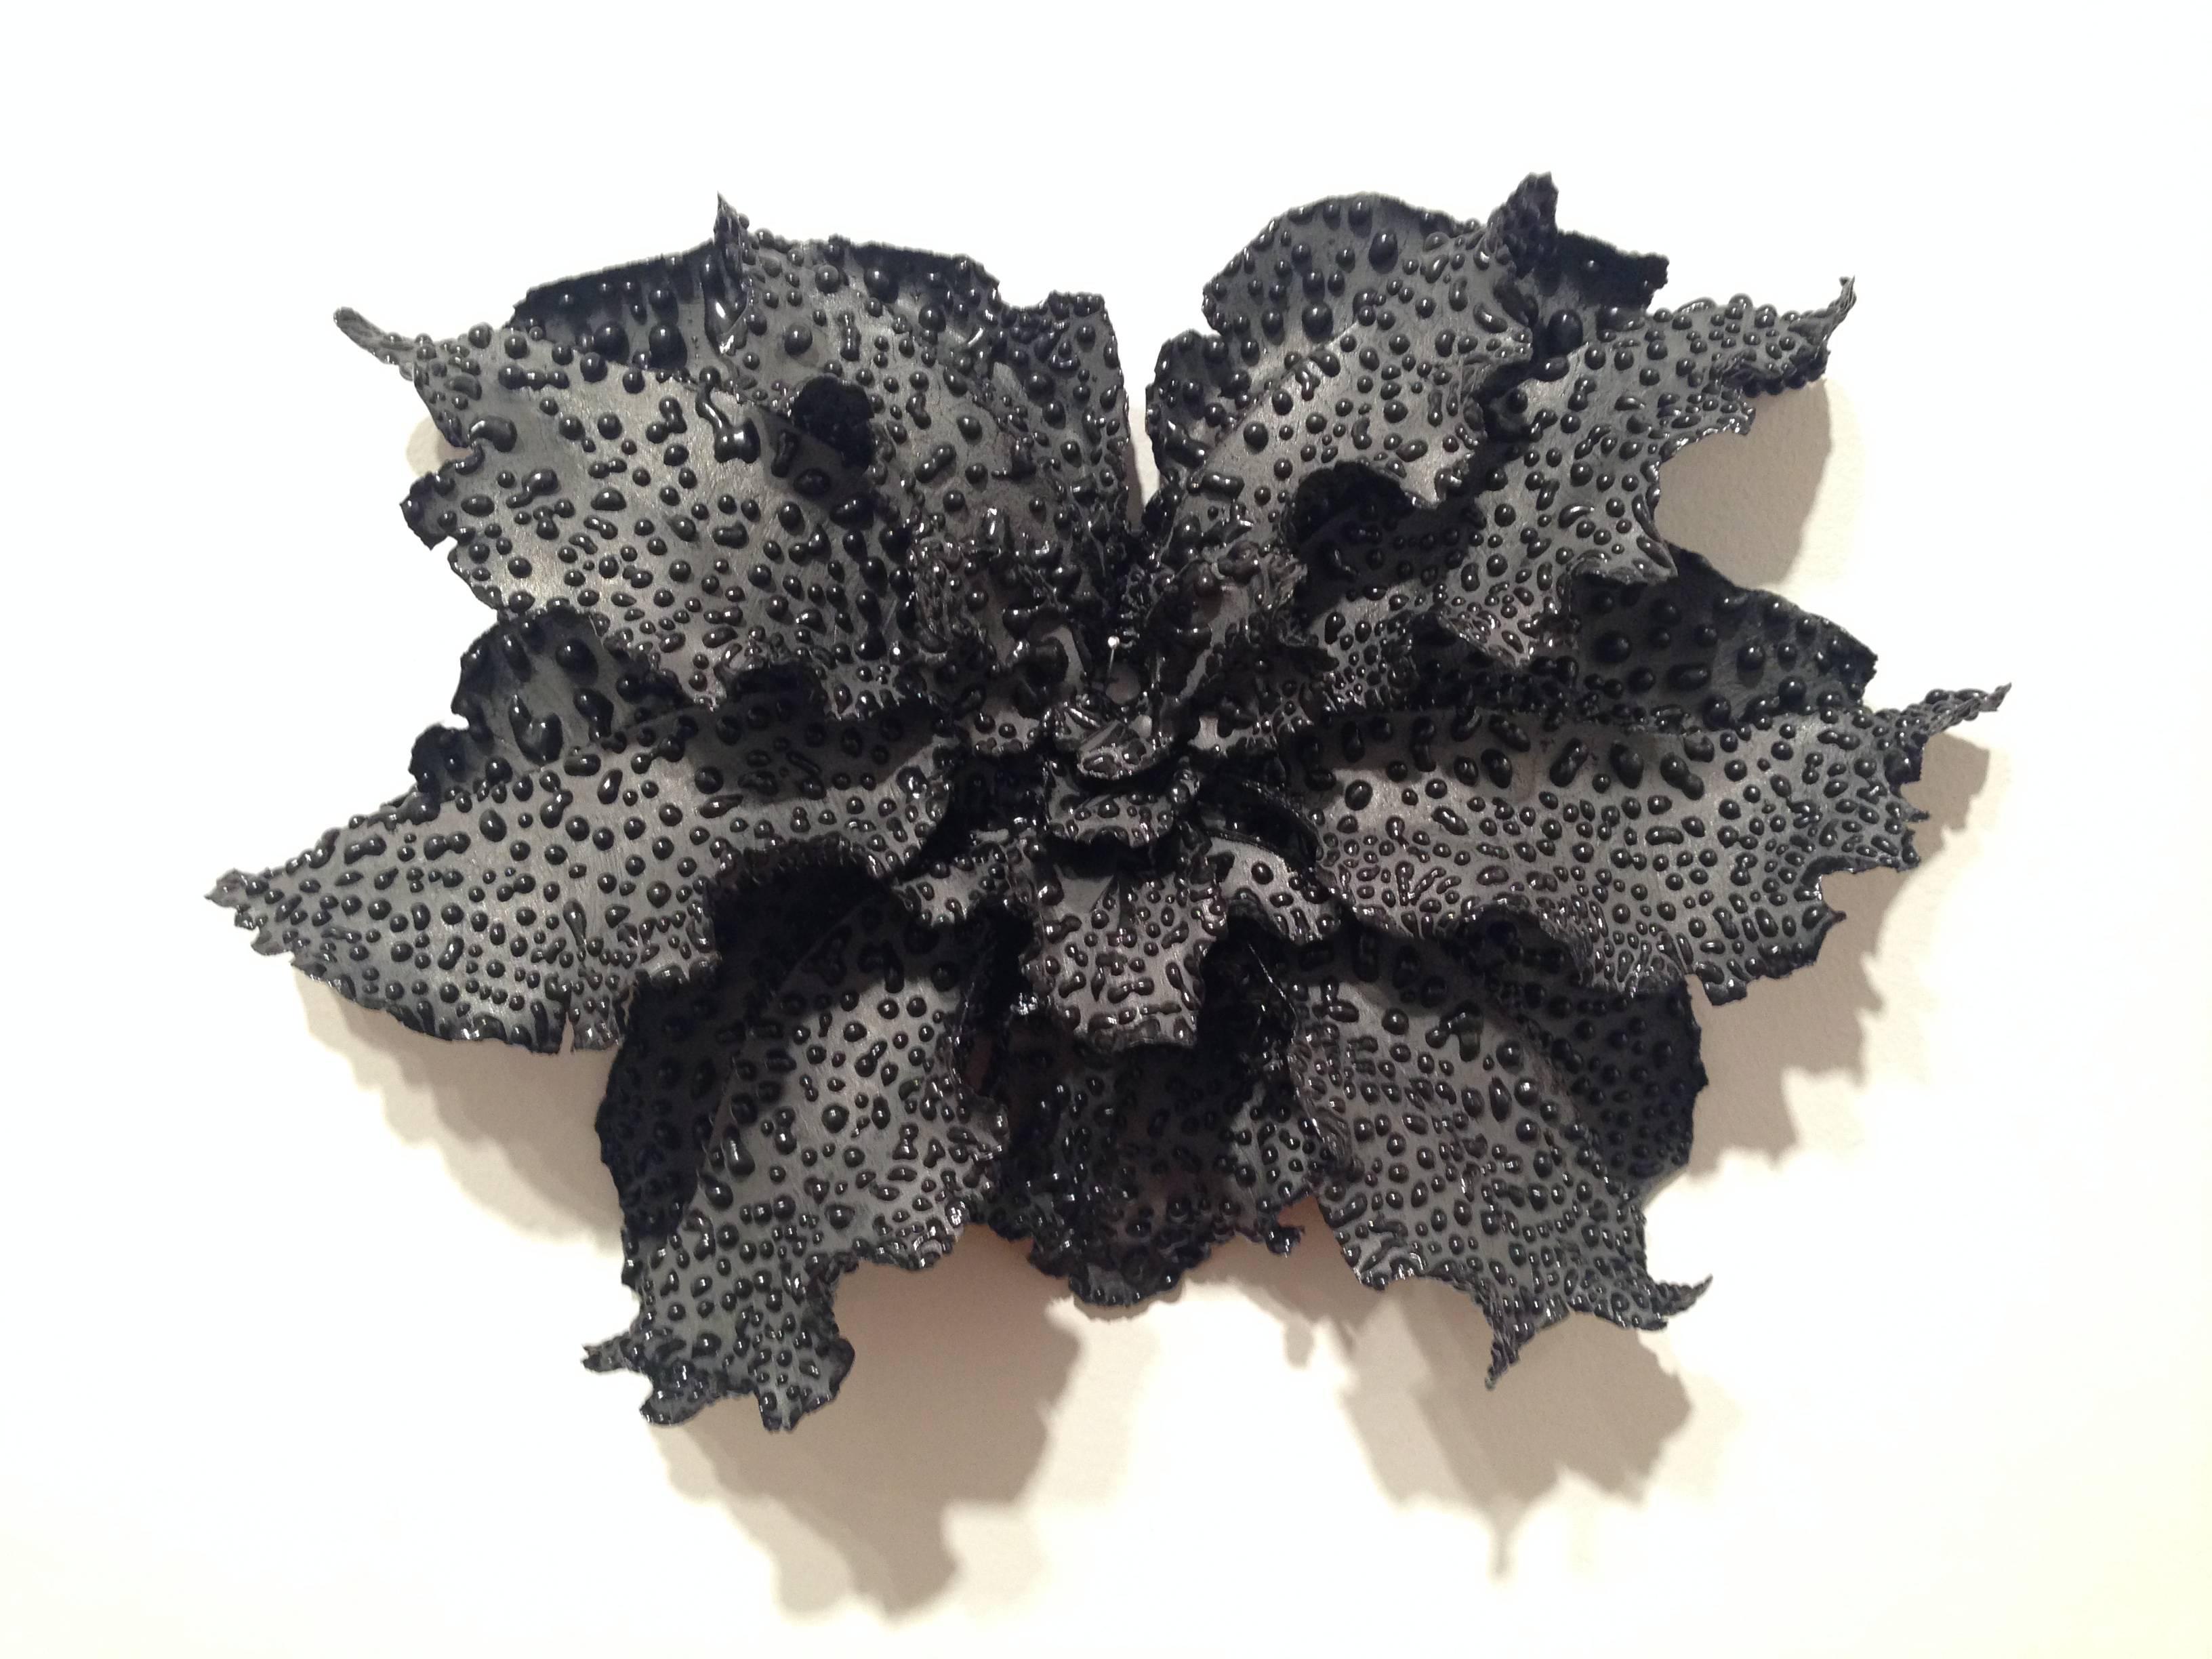 Christopher Adams Still-Life Sculpture - Primordial Garden J7, gray and black biomorphic flora-like ceramic sculpture